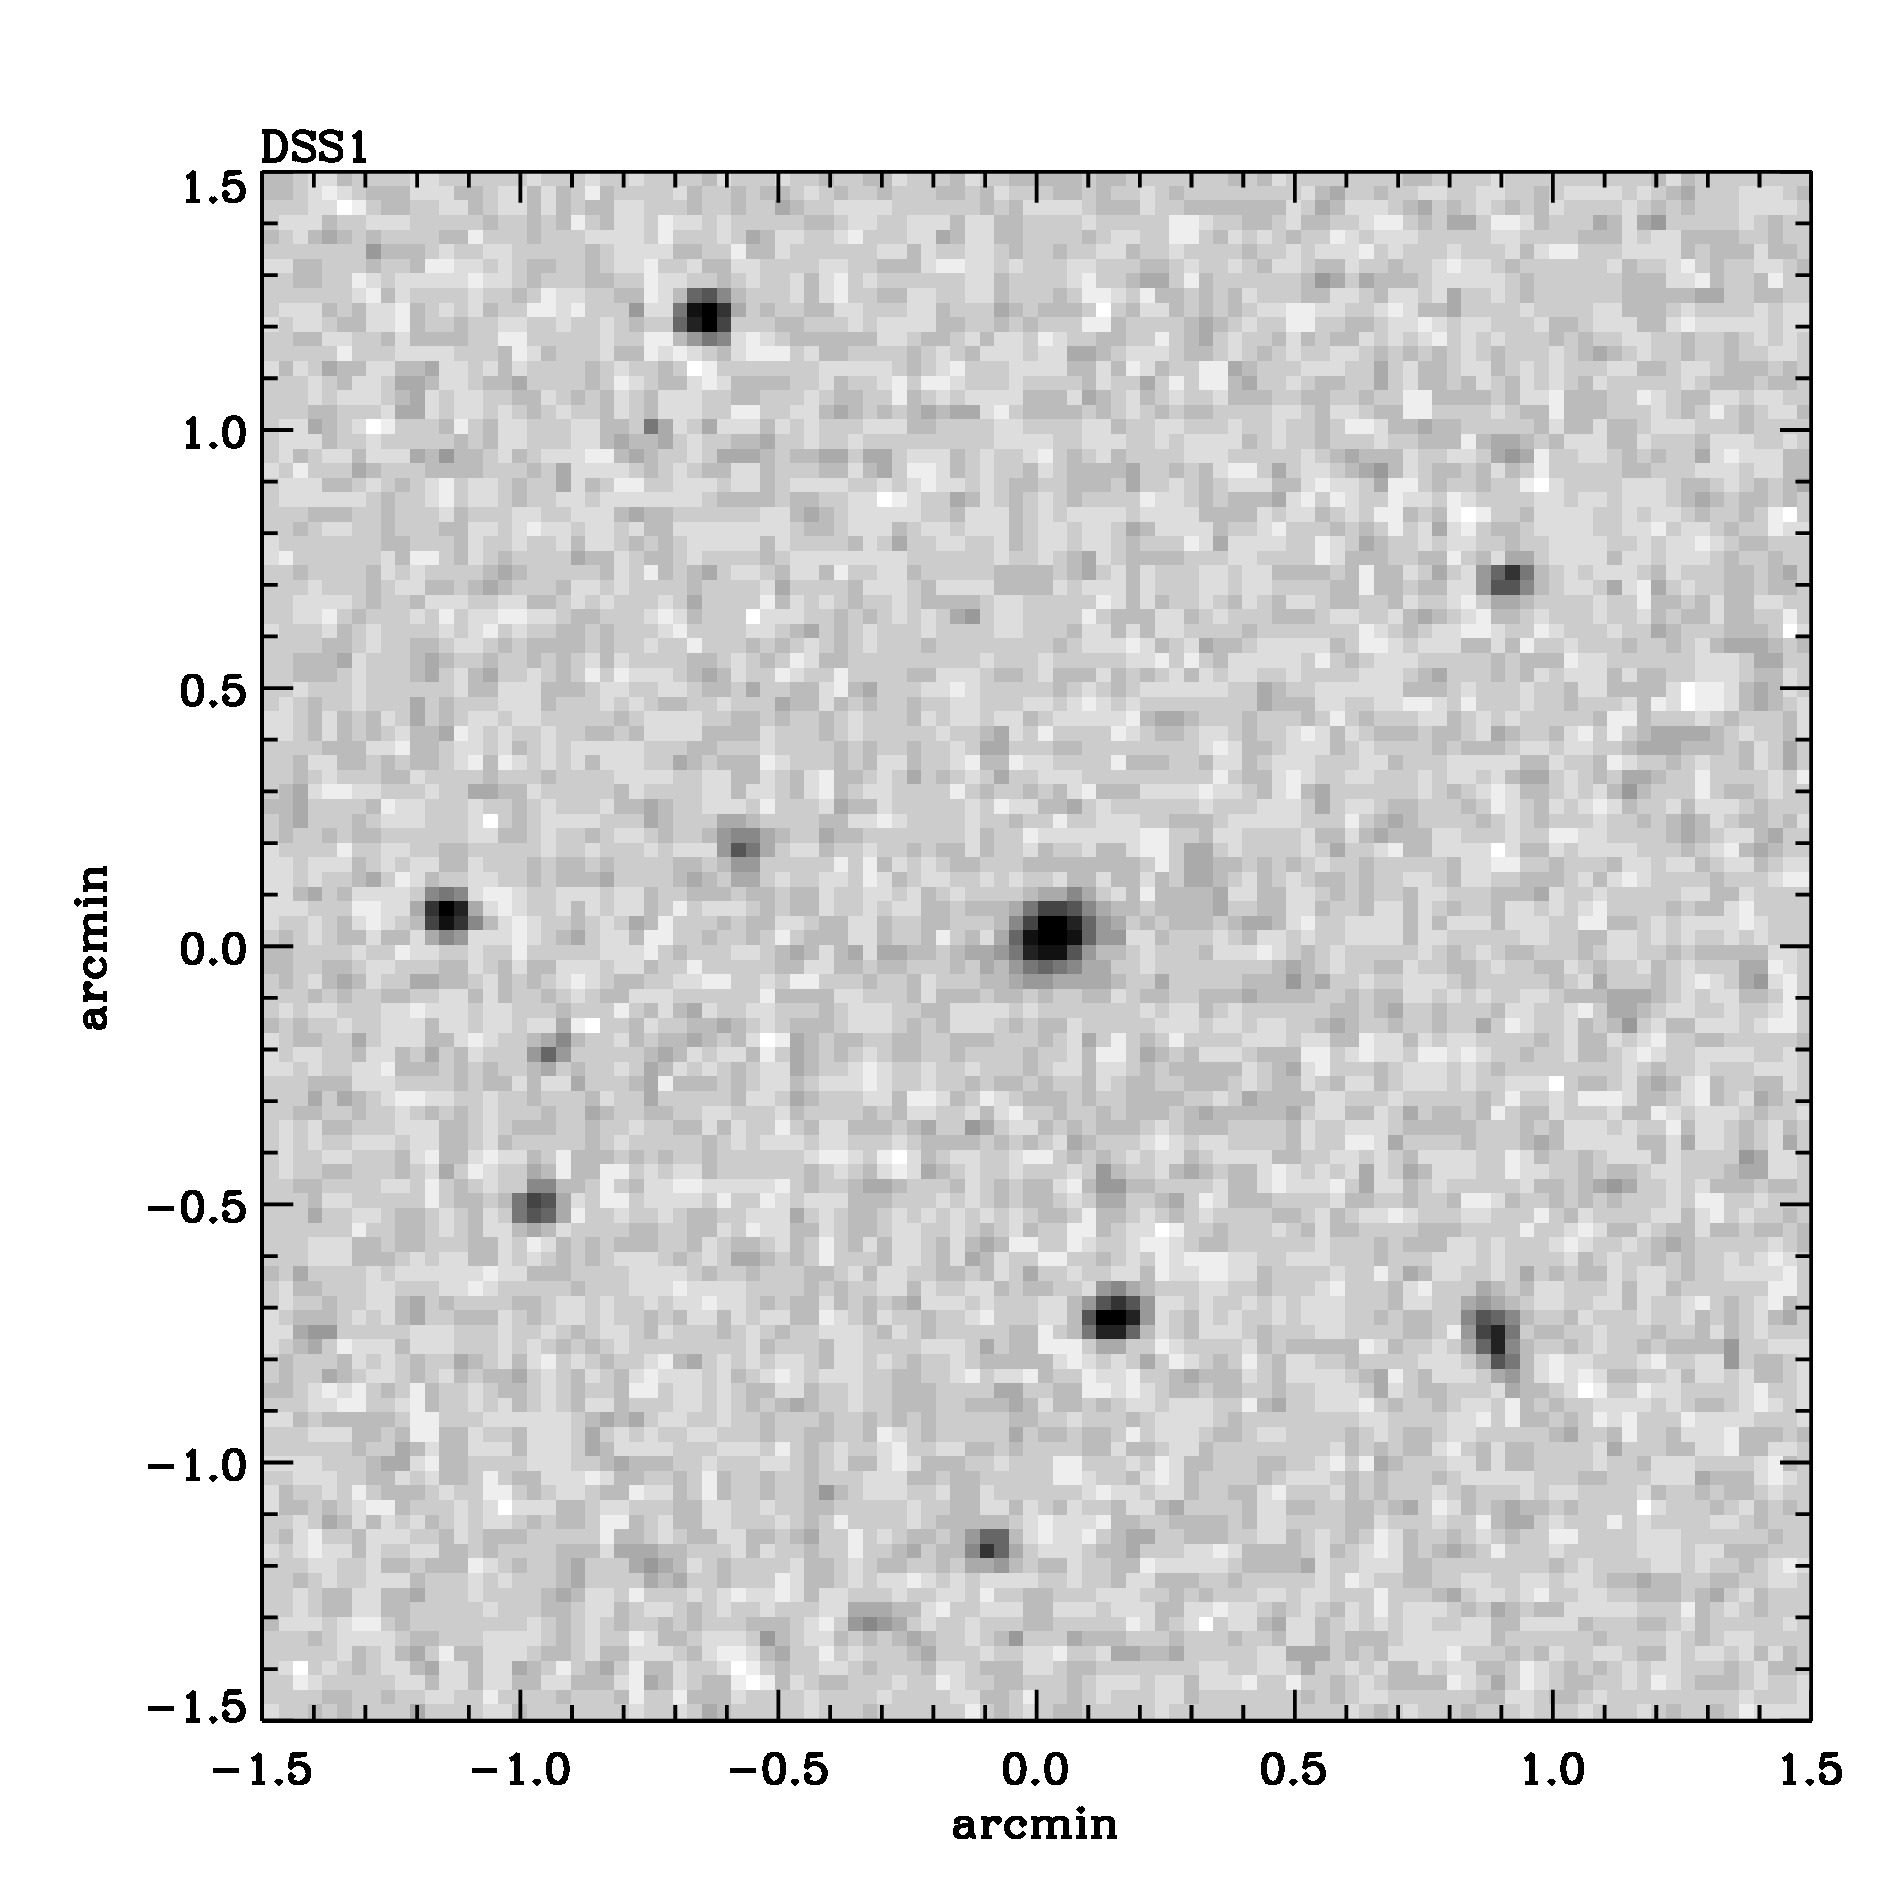 Optical image for SWIFT J1428.7+4234